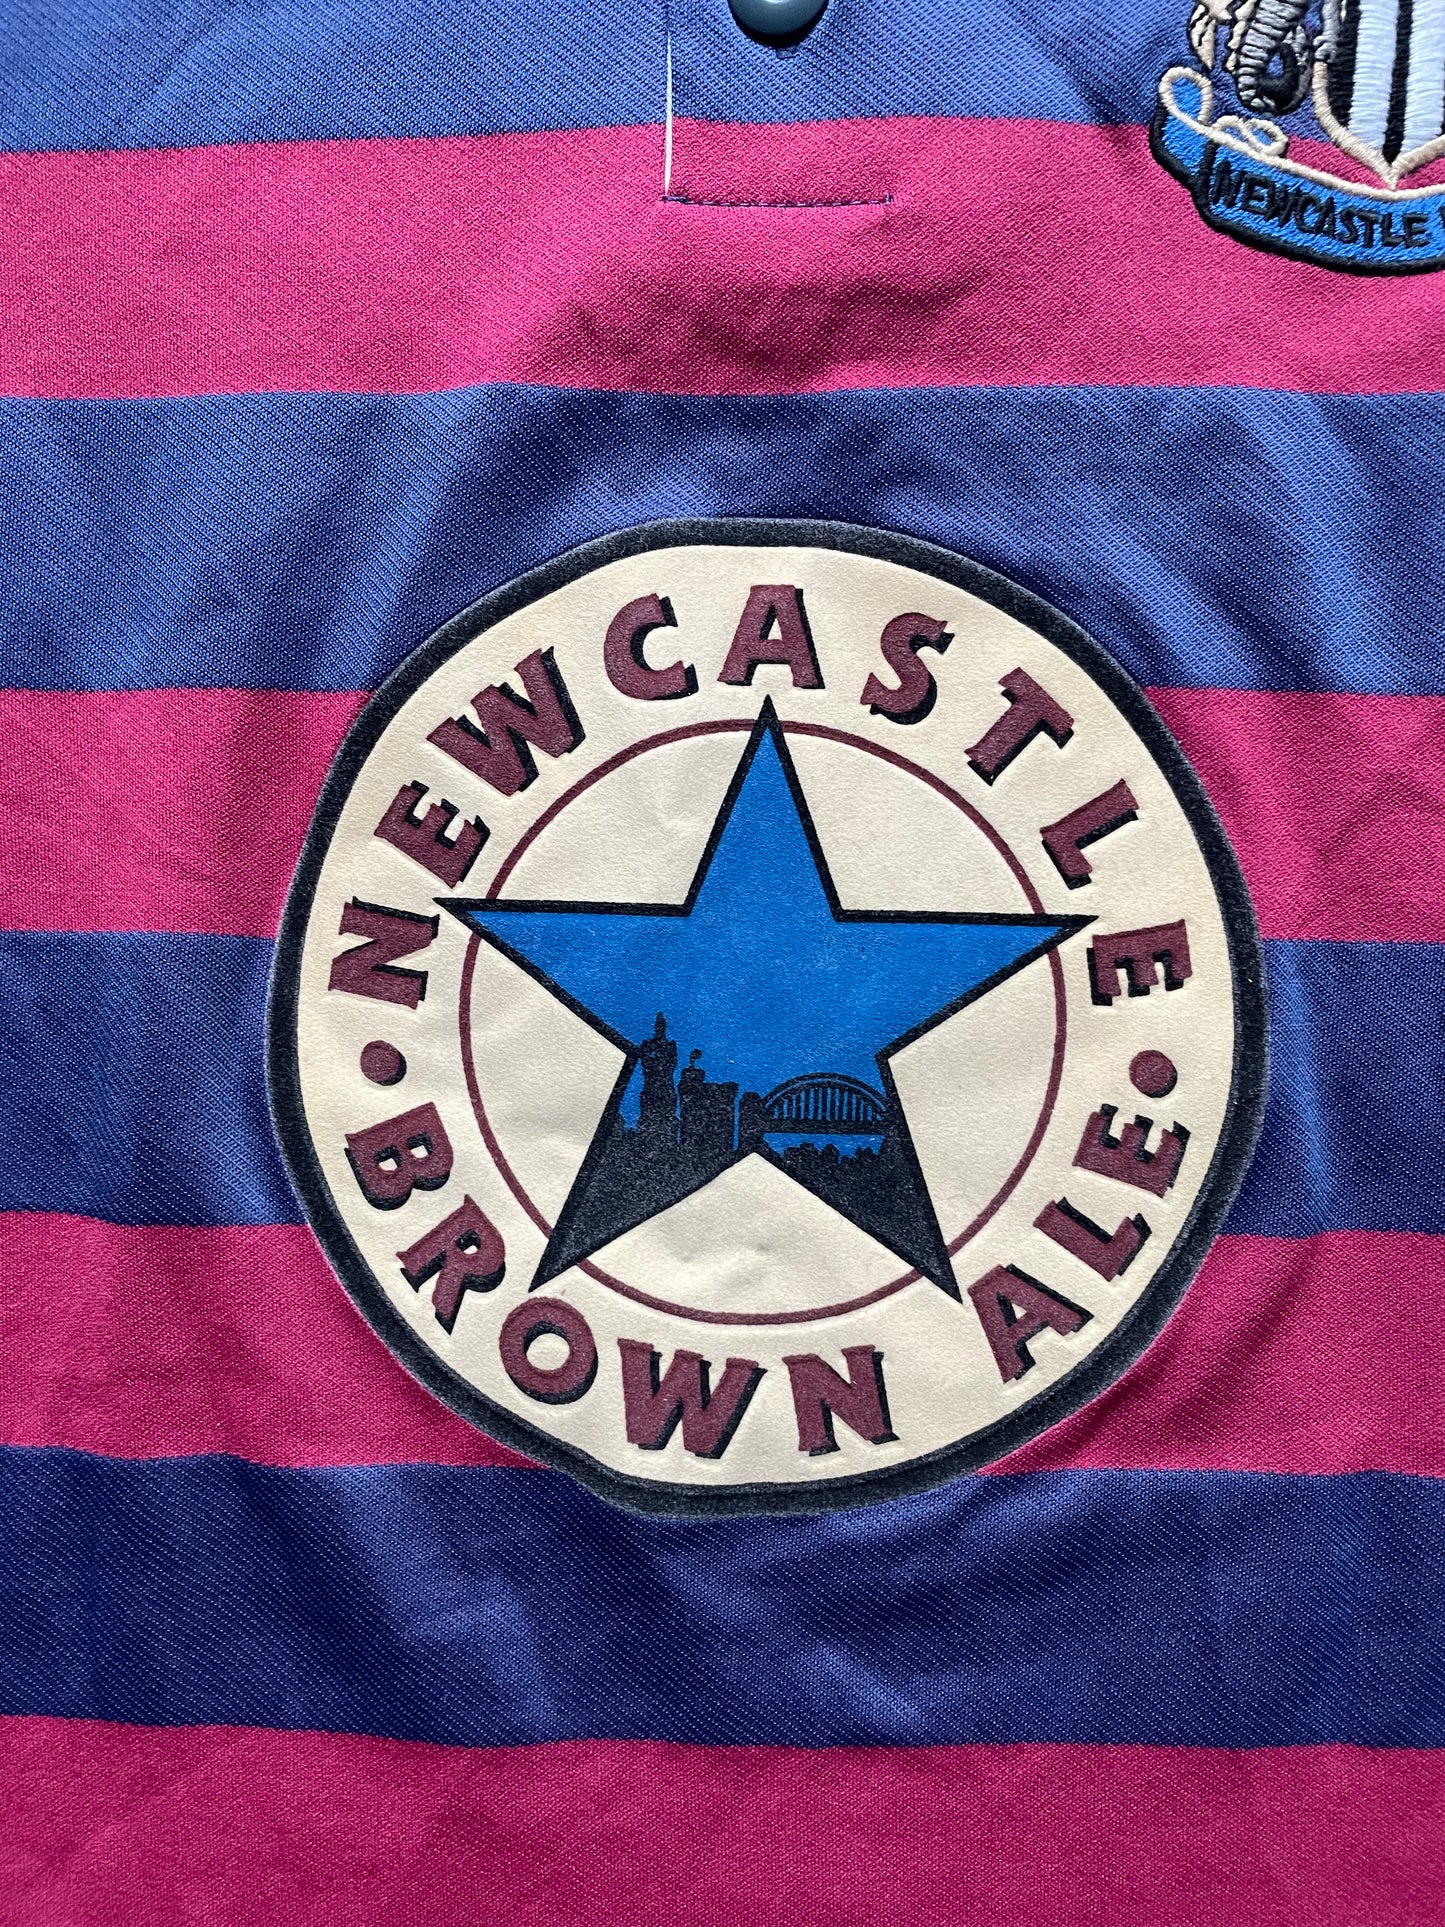 Newcastle 1995 Away Shirt FERDINAND 9 (excellent) Adults Medium Score Draw